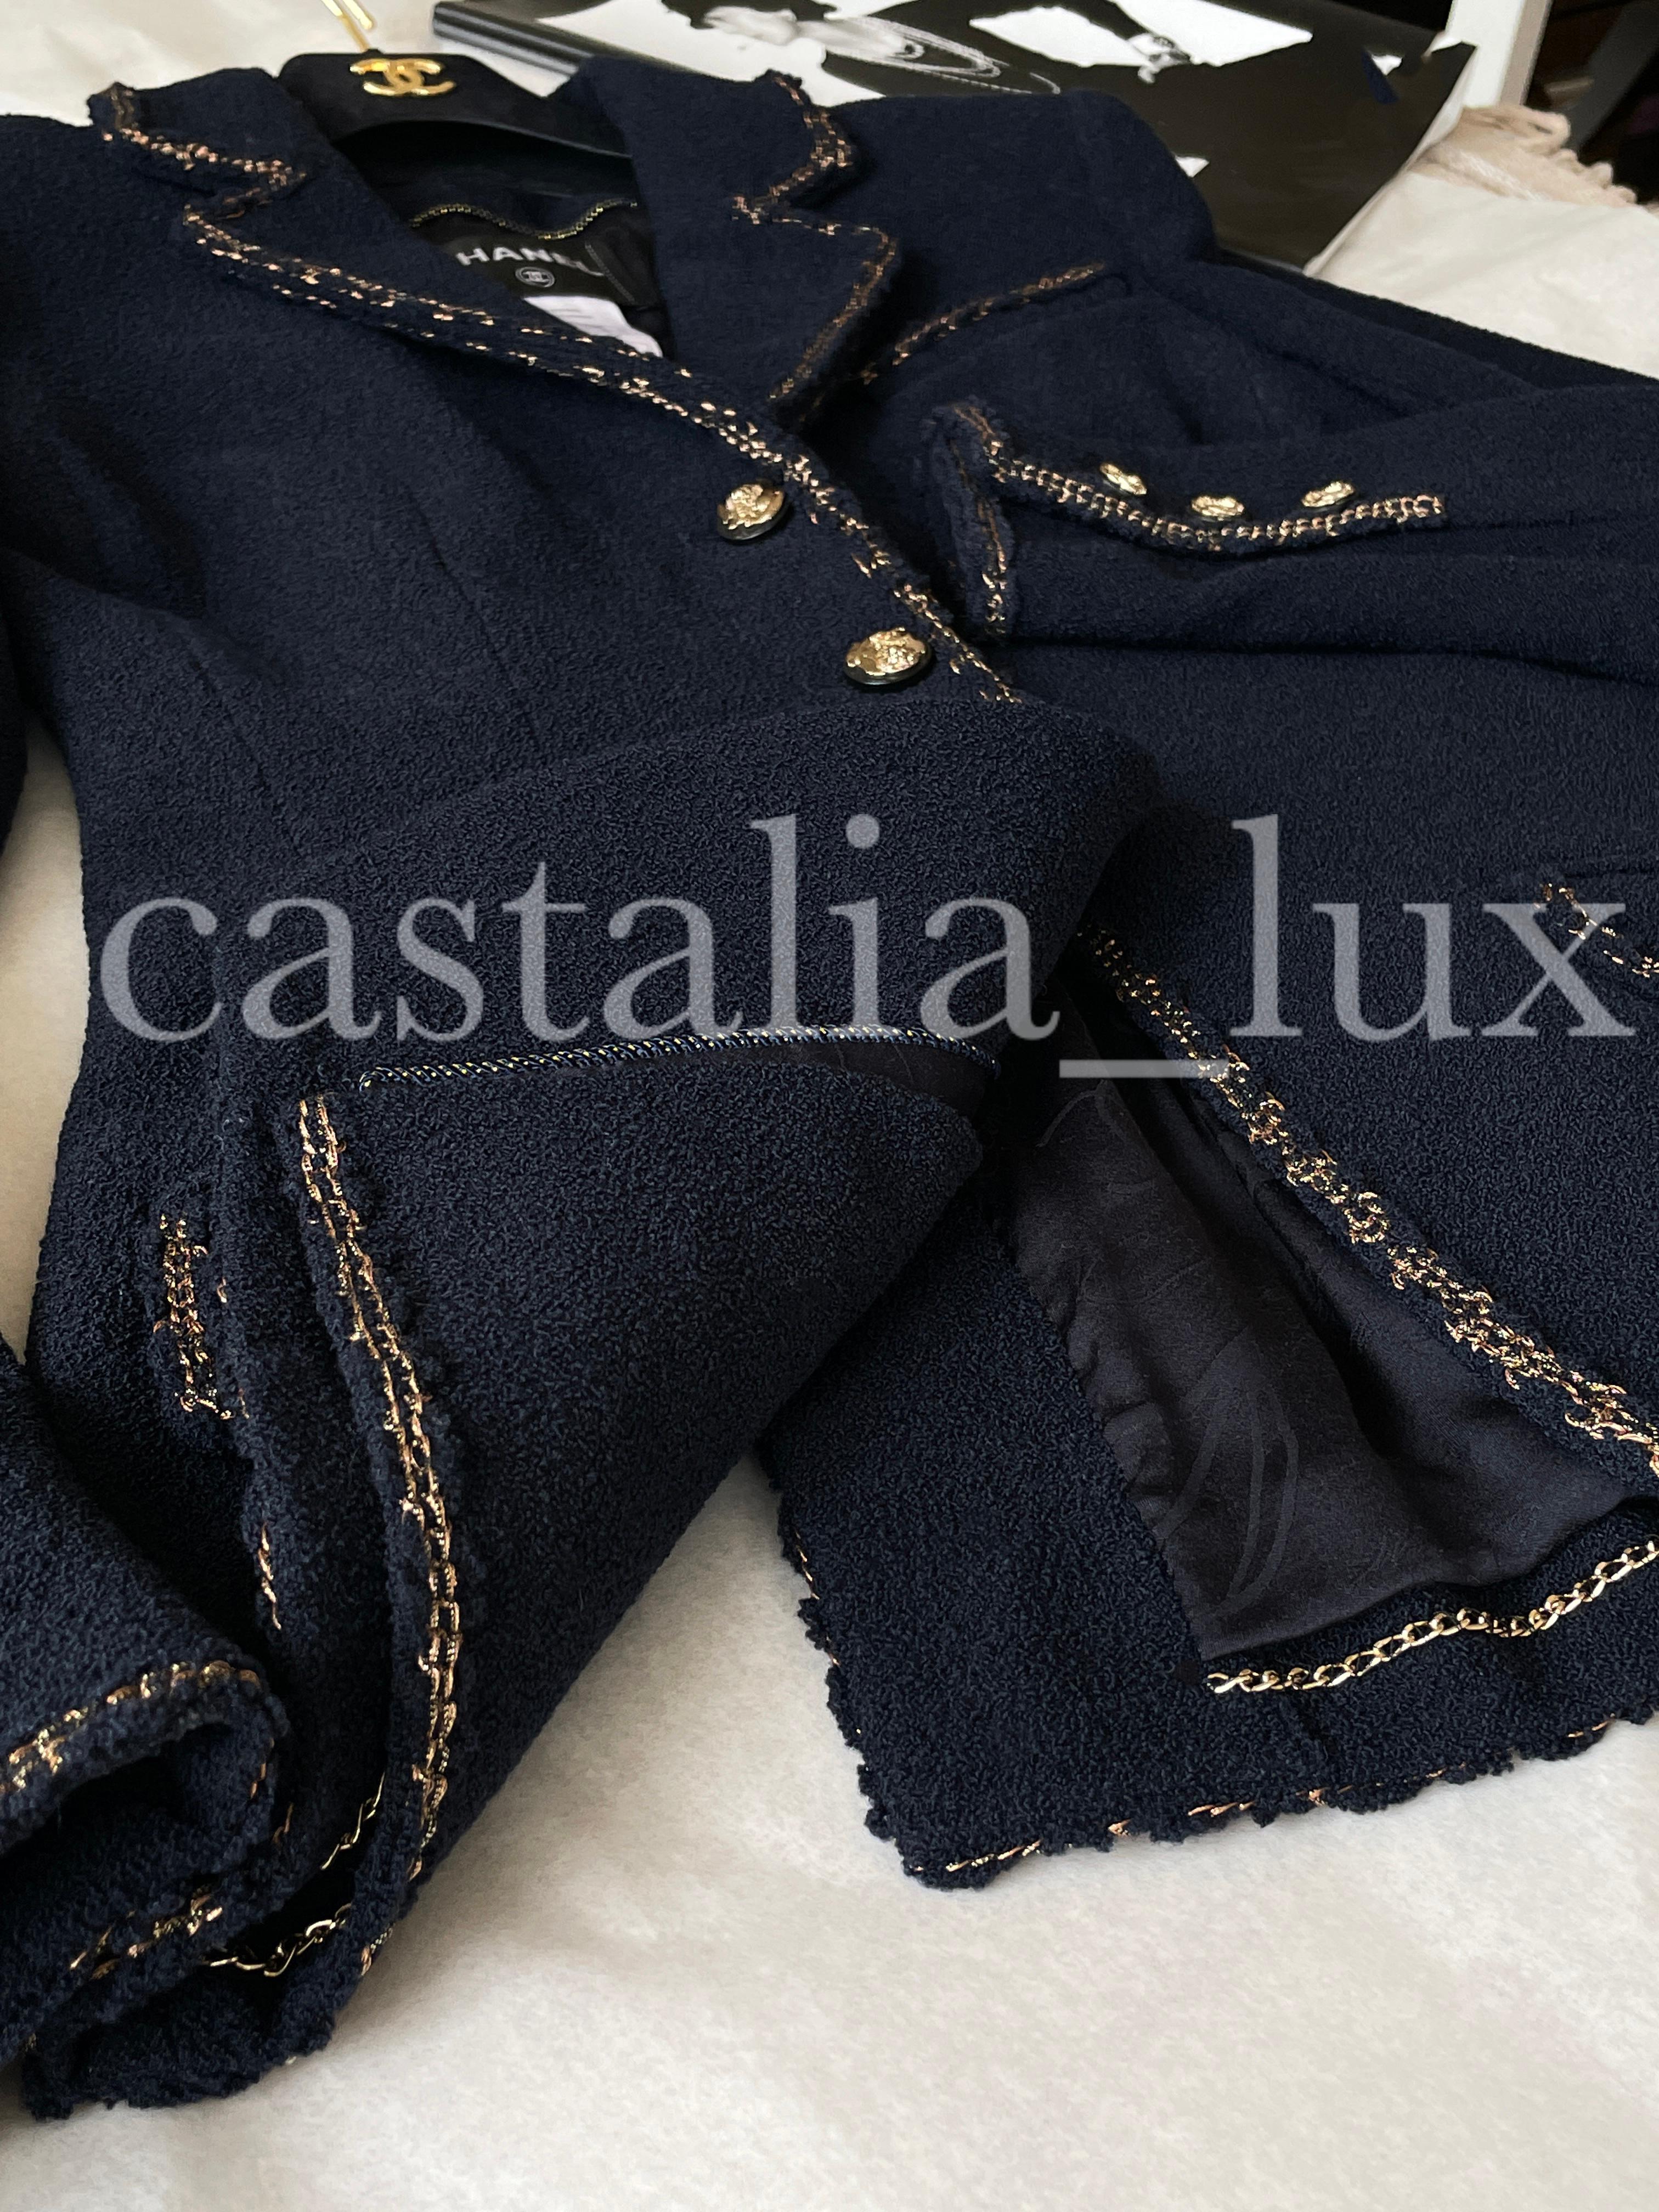 Chanel Iconic Paris / Venice Little Tweed Jacket For Sale 3